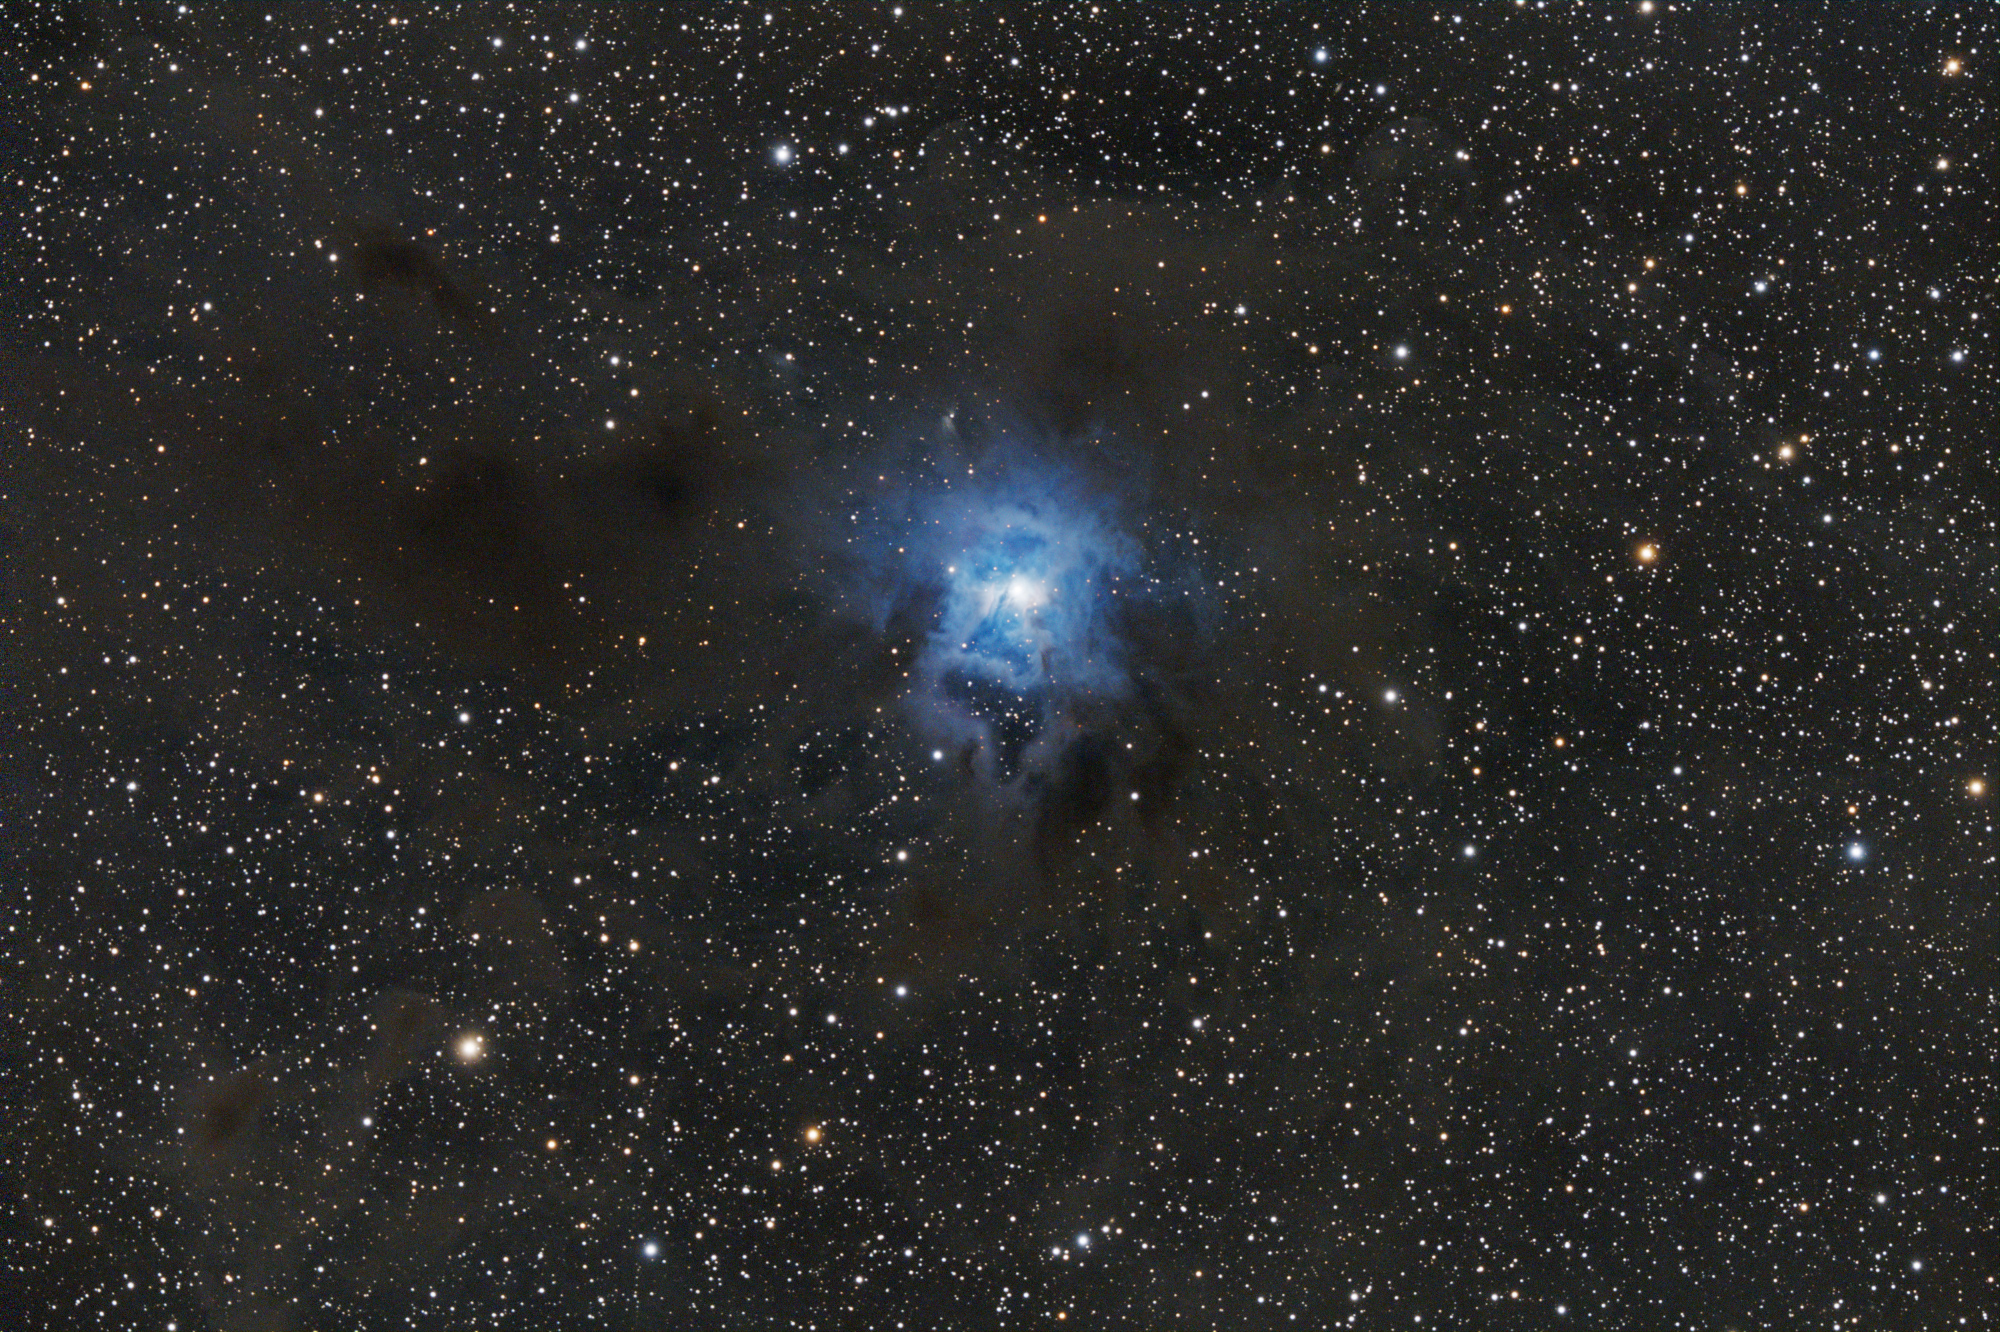 NGC_7023_SIRIL-1-iris-cs5-2-FINAL.jpg